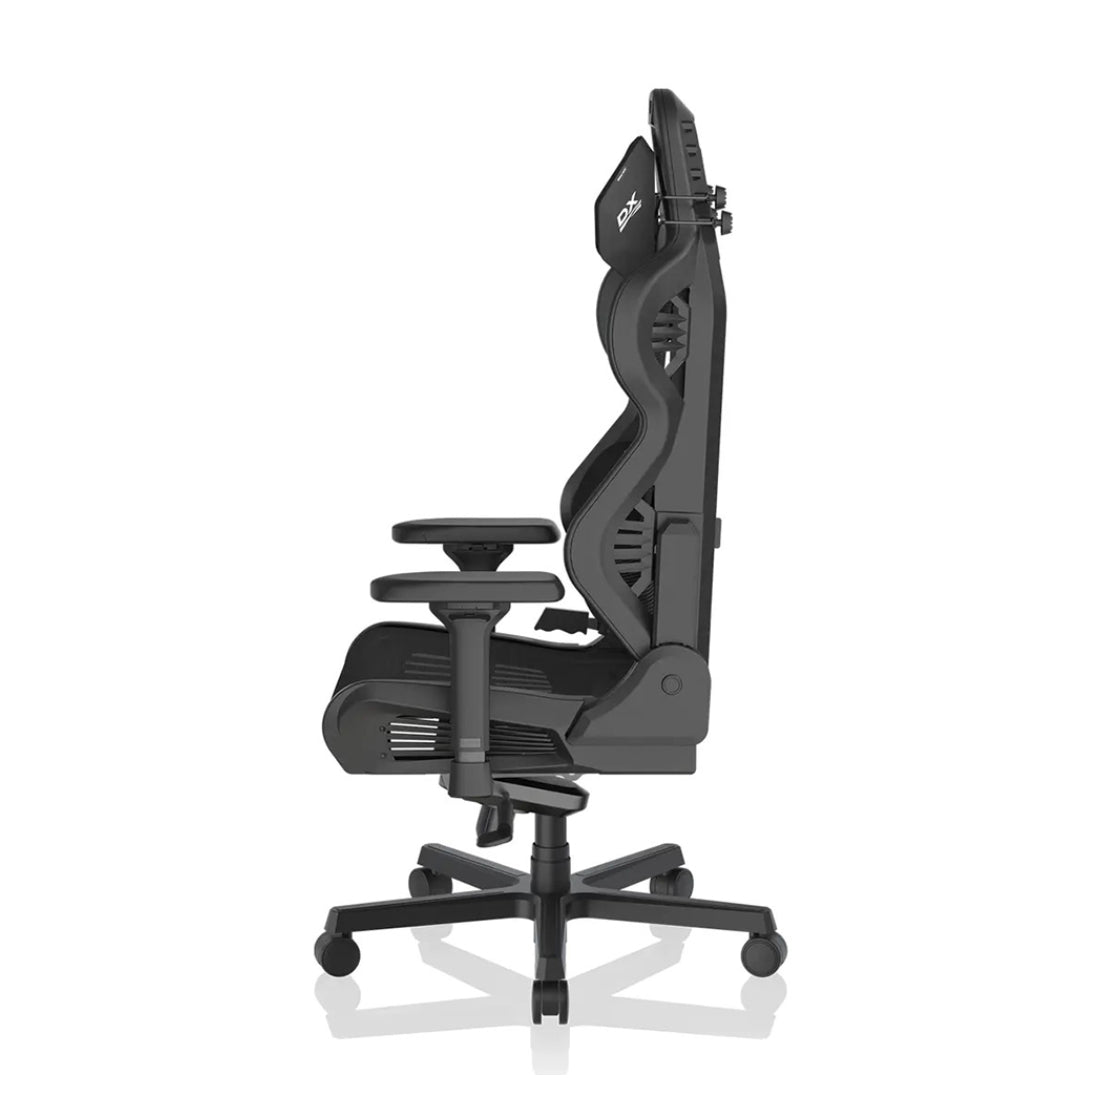 DXRacer Air Pro Gaming Chair - Black - كرسي - Store 974 | ستور ٩٧٤